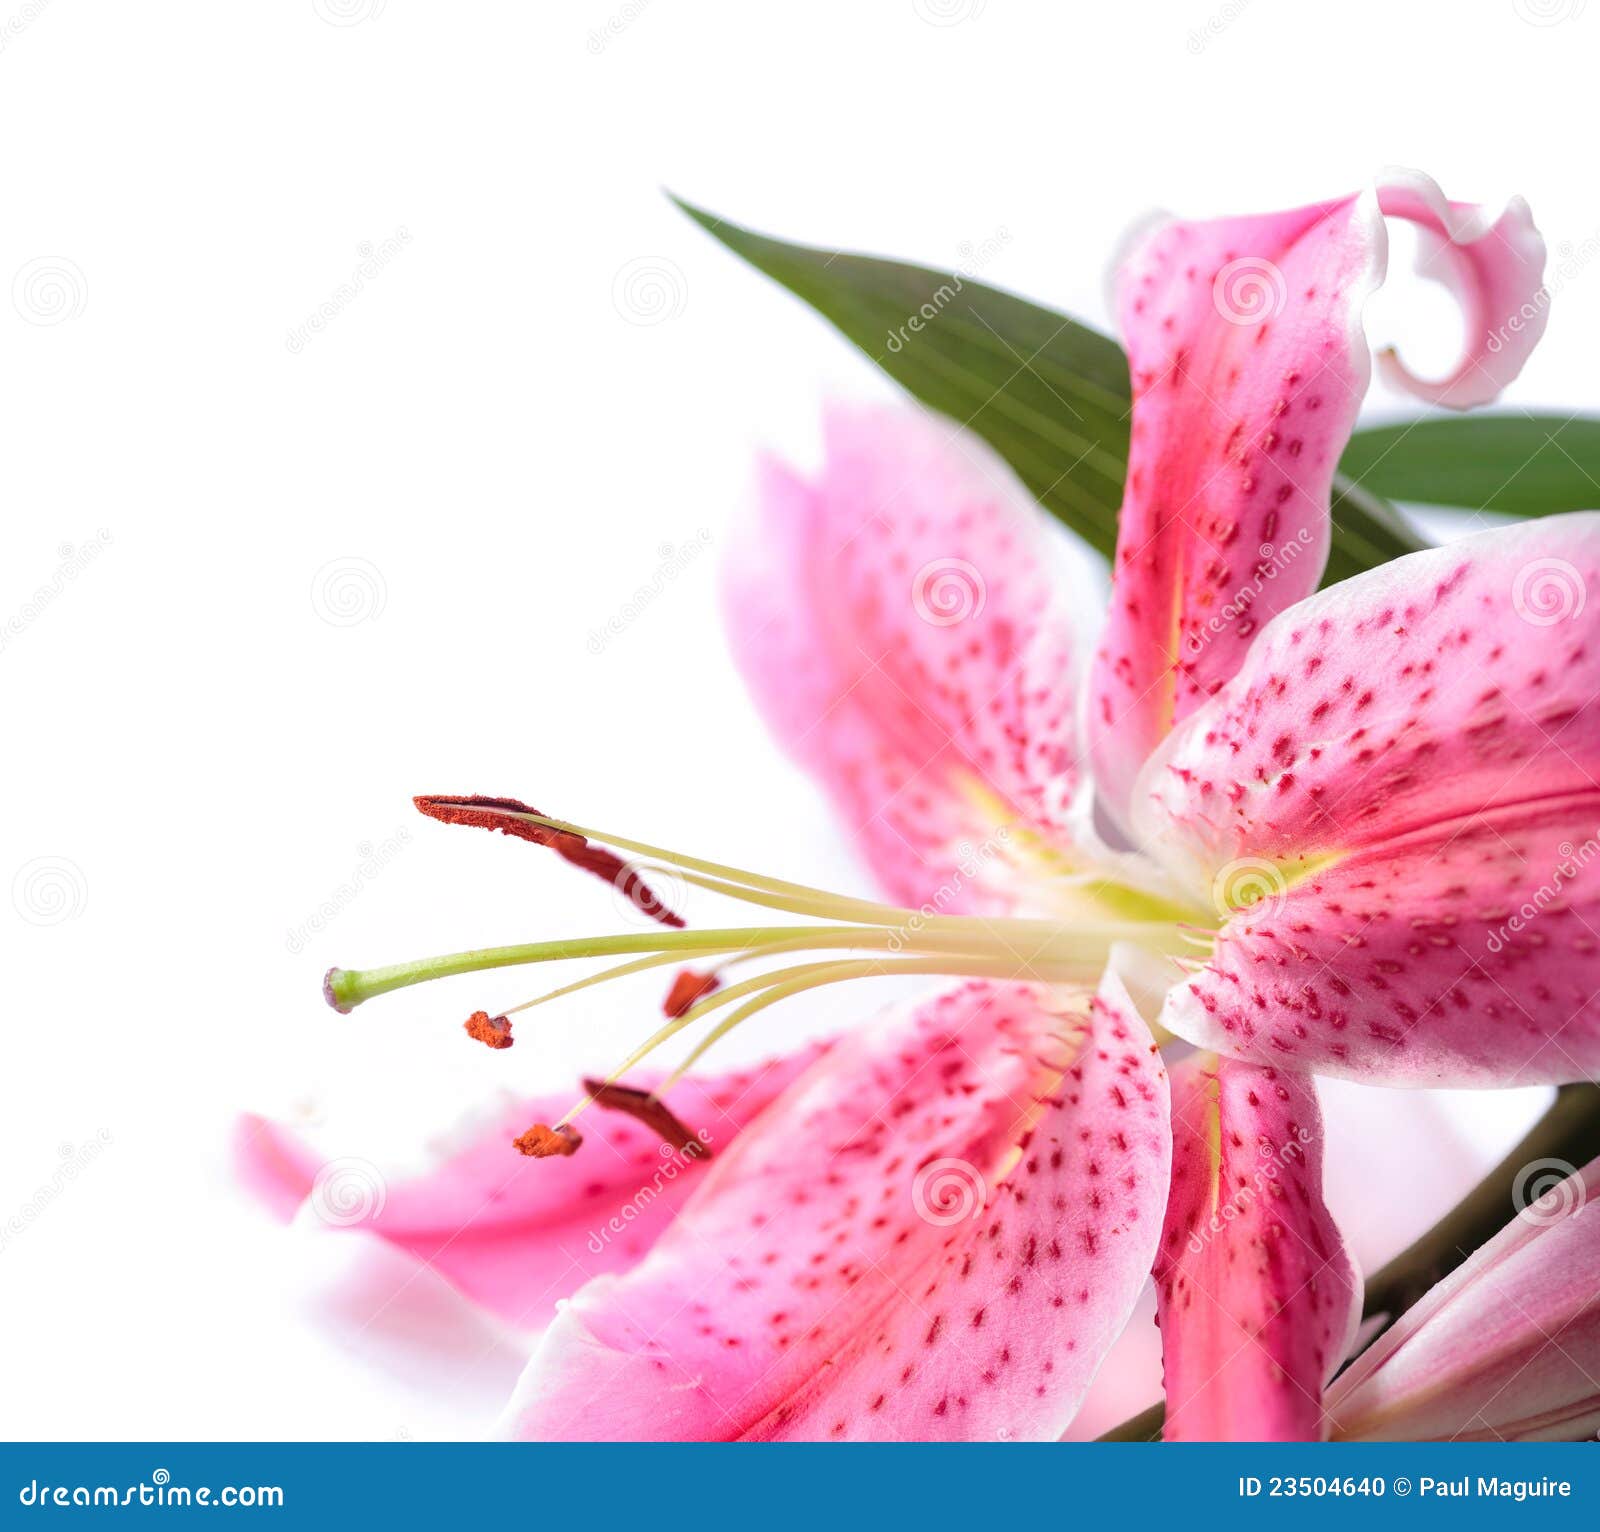 Stargazer lily pics